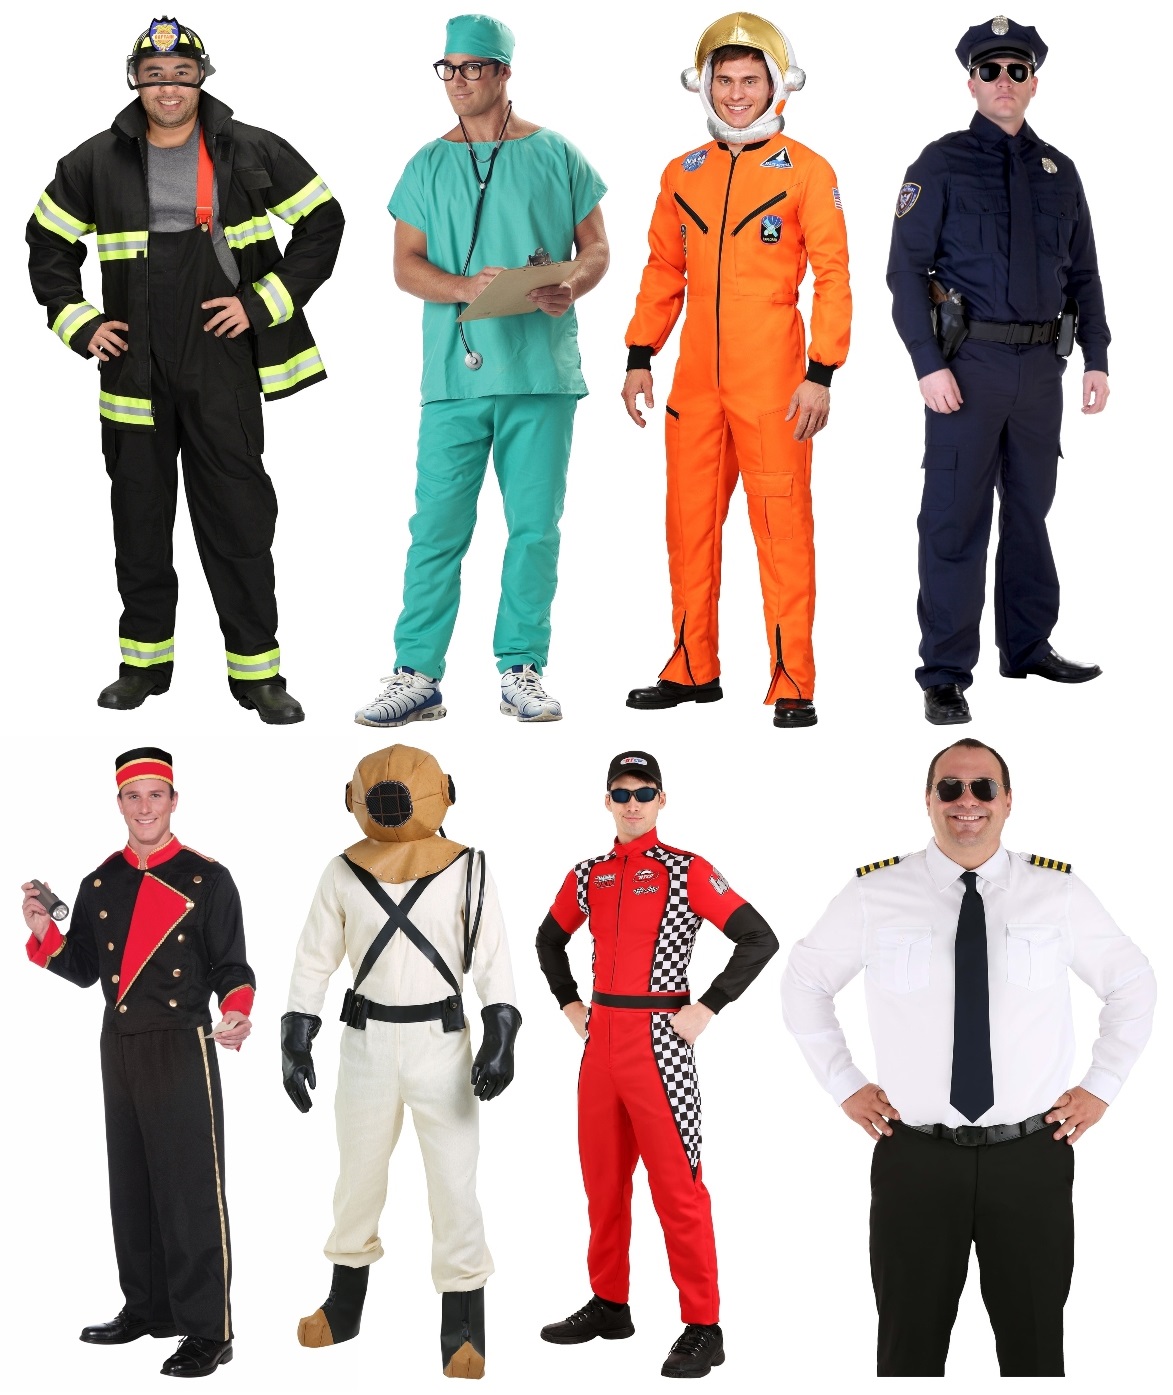 Unisex Uniform Costumes for Adults